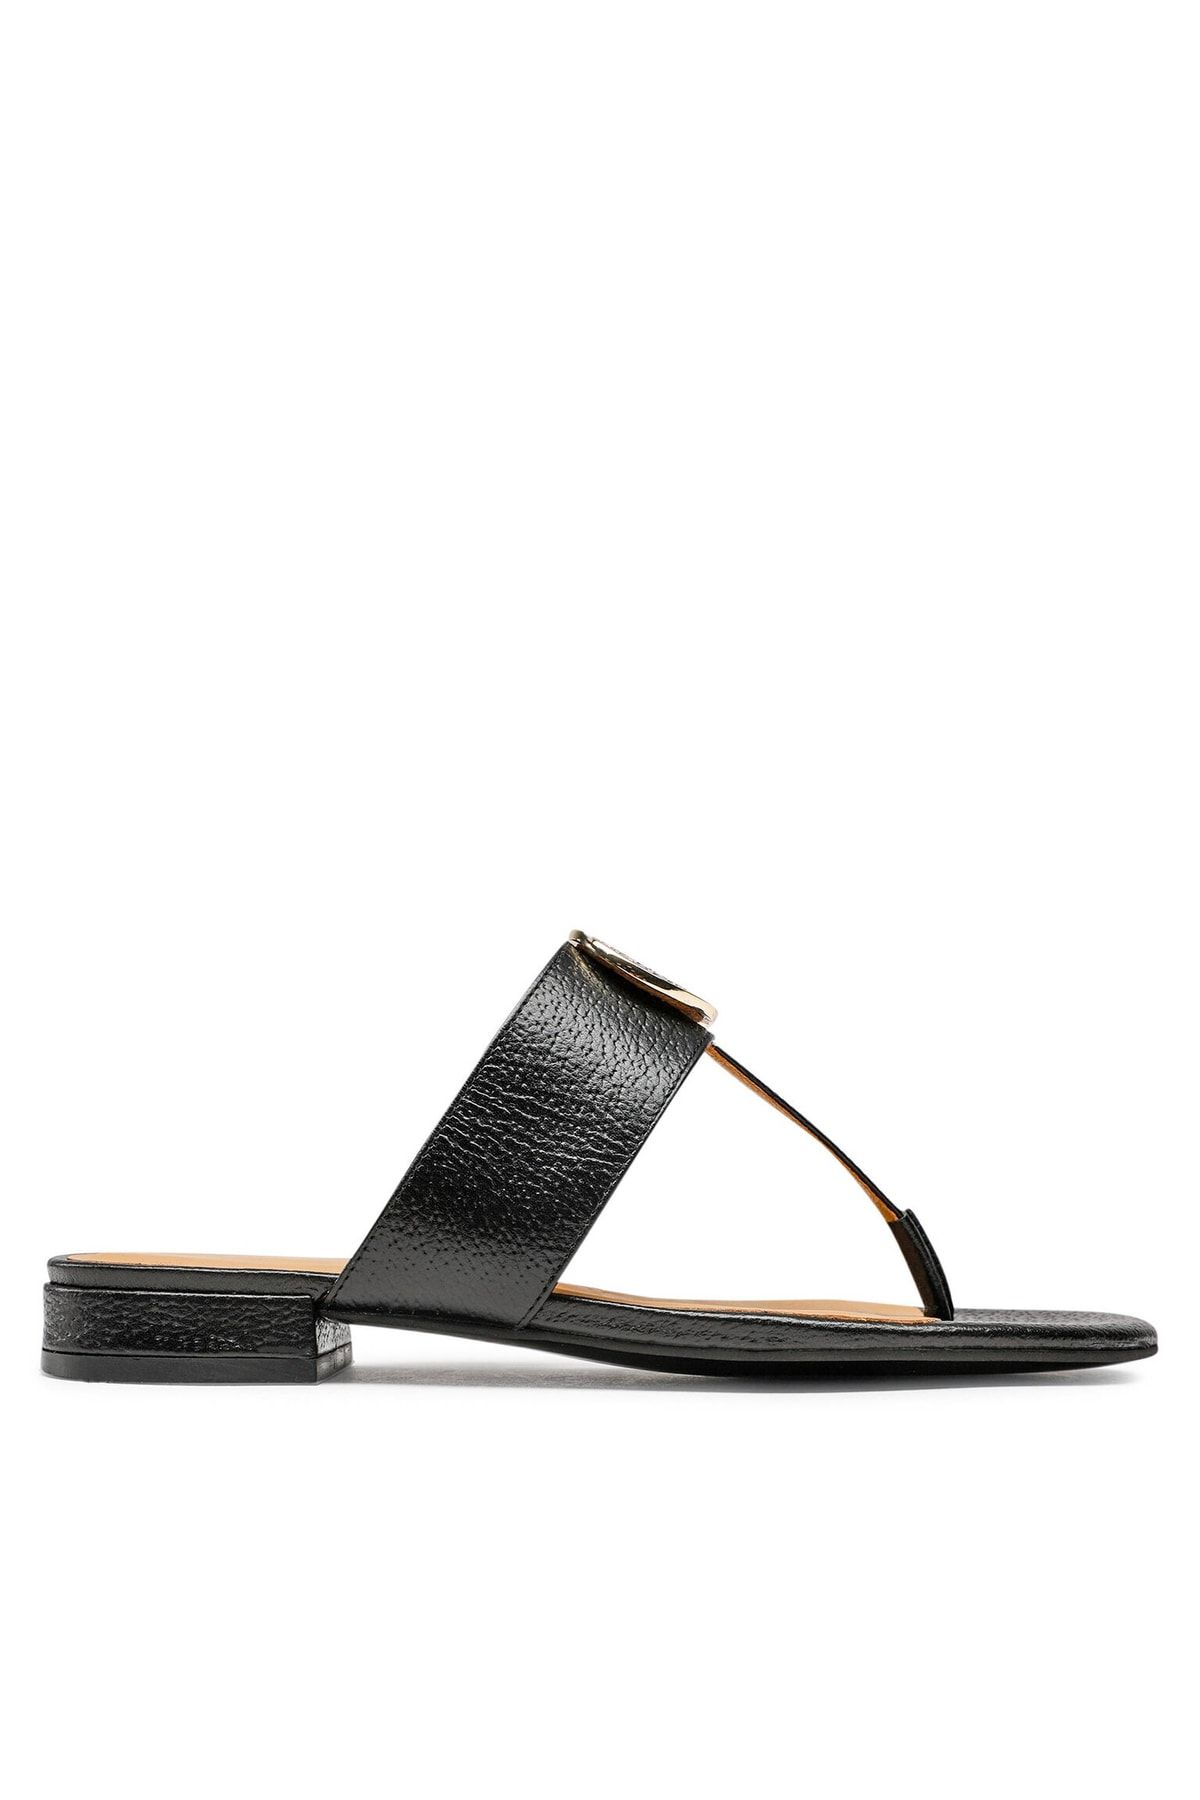 Emporio Armani Kadın Ince Tabanlı Parmak Arası Siyah Sandalet X3q078 Xf636-sıy